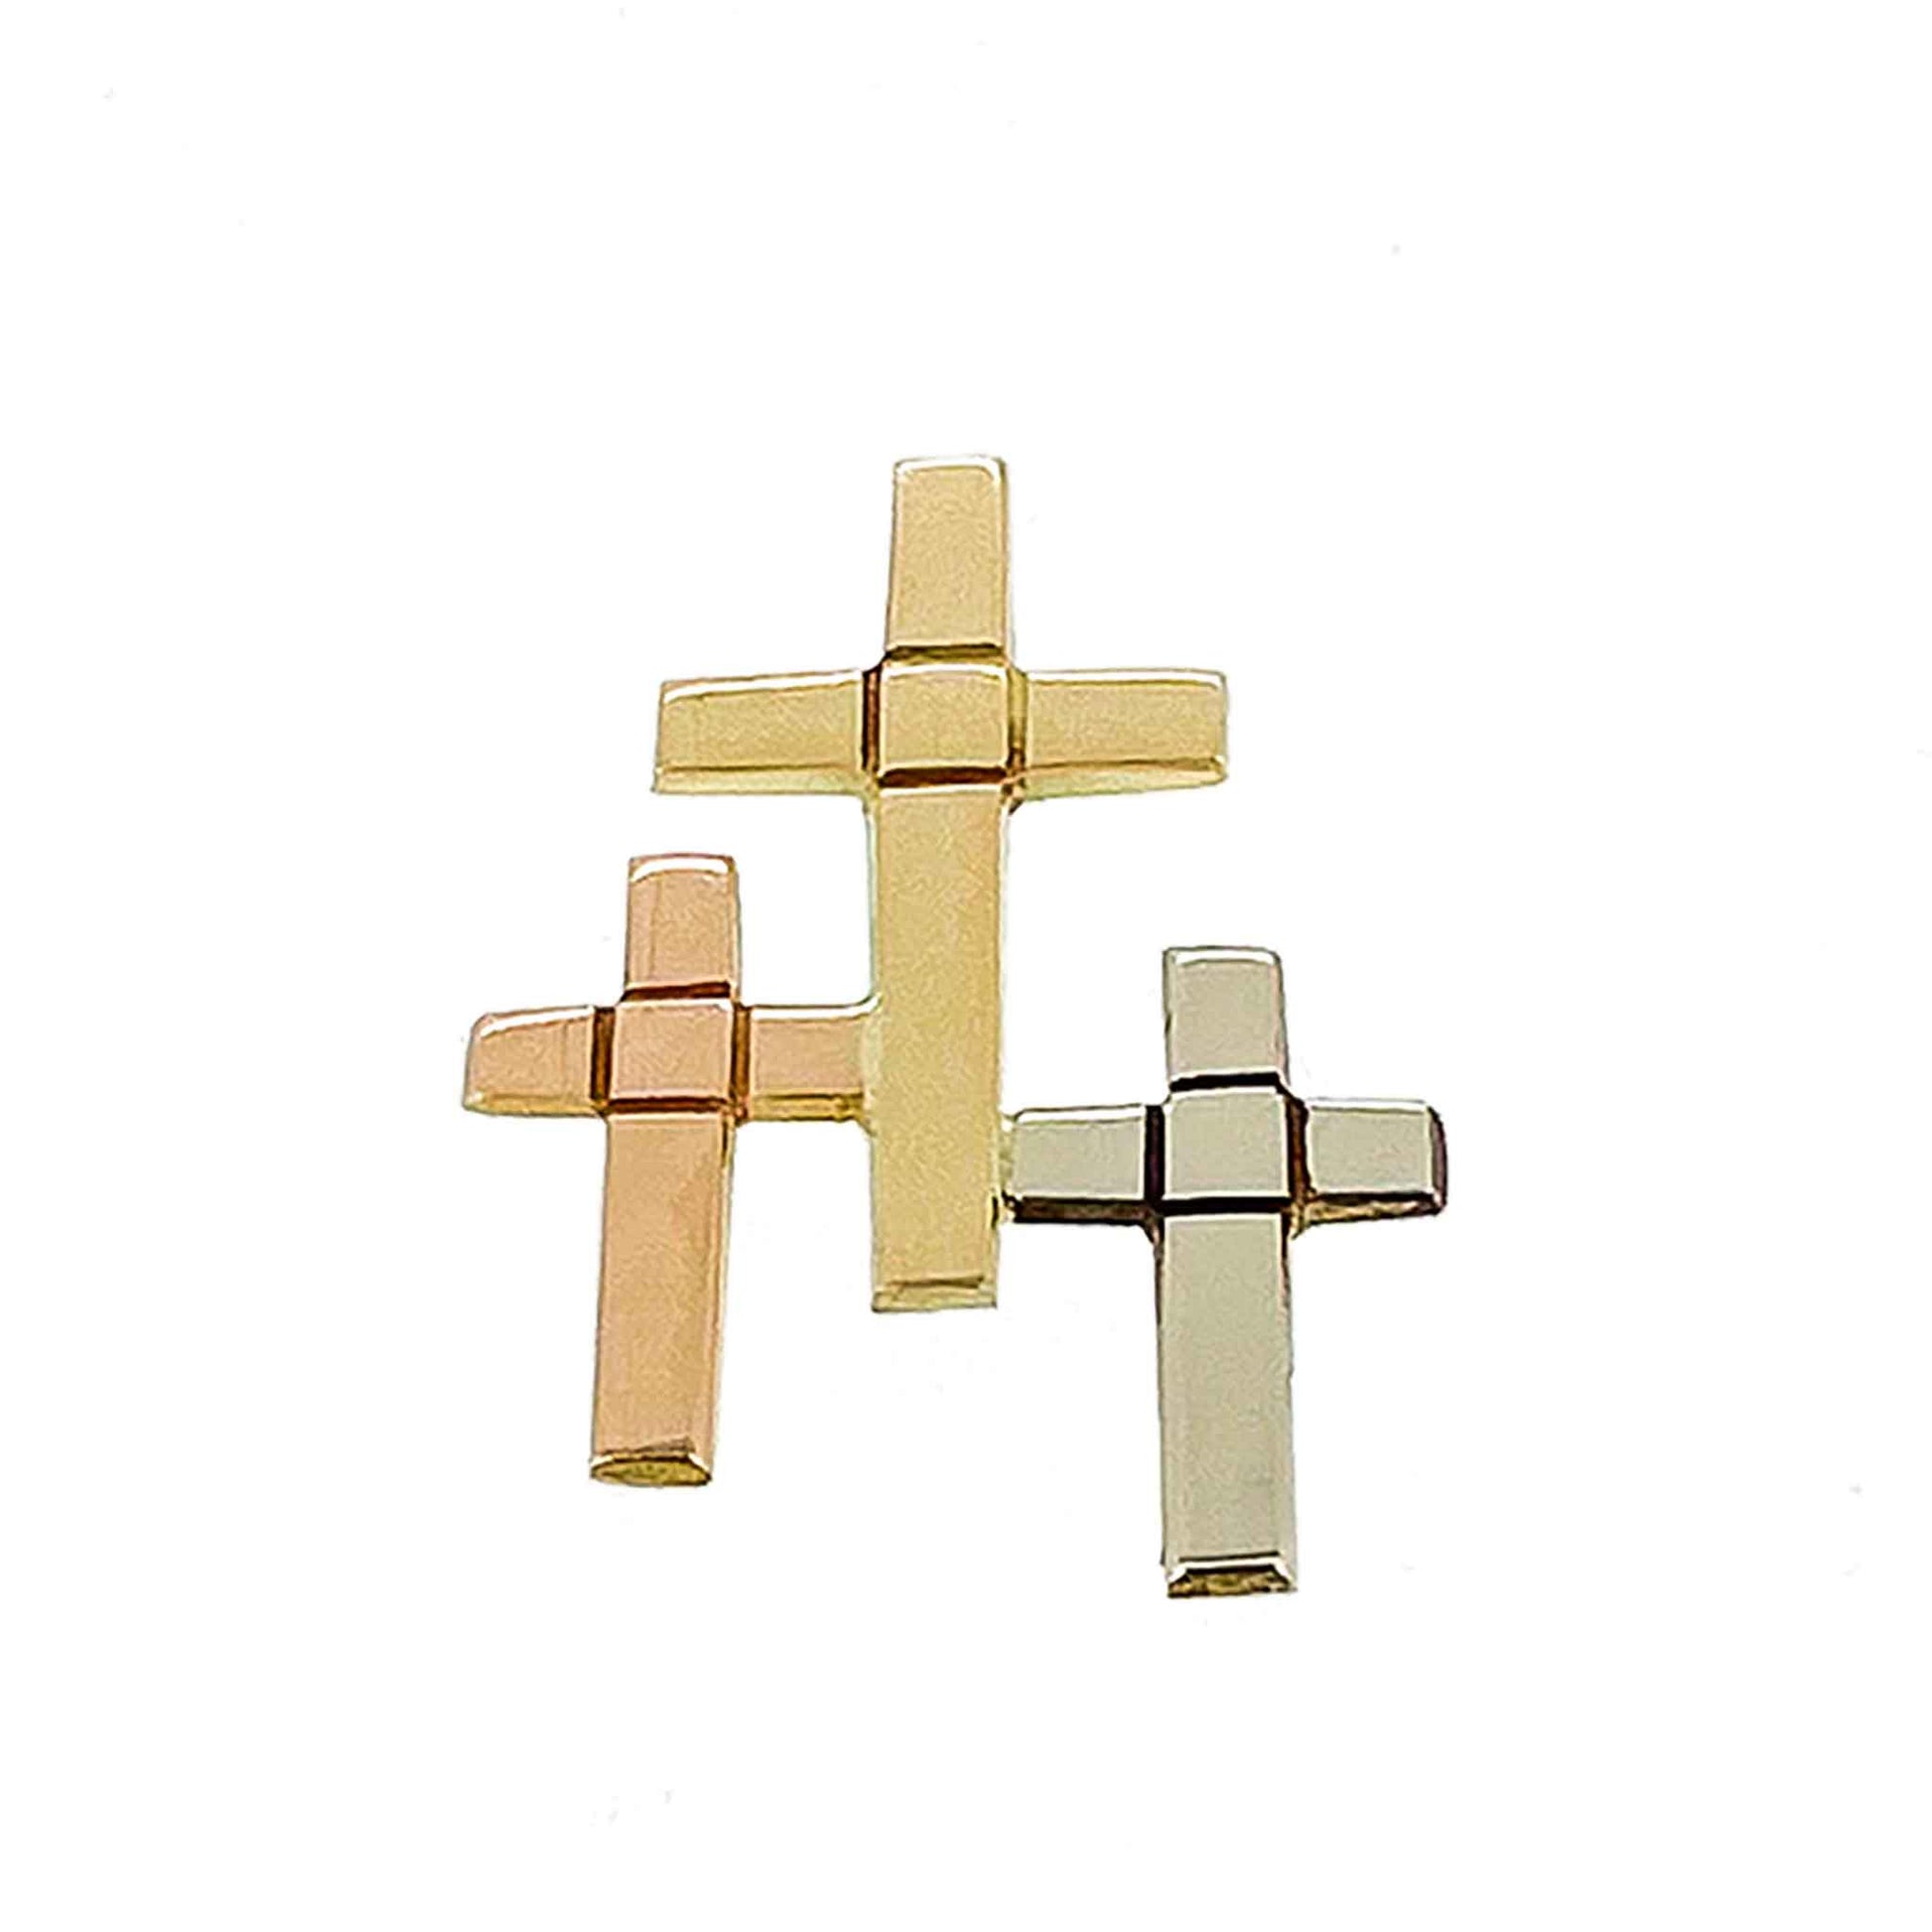 The Authentic Golden Trinity Cross designed by Ásgeir Gunnarssson - 14k gold - nammi.is